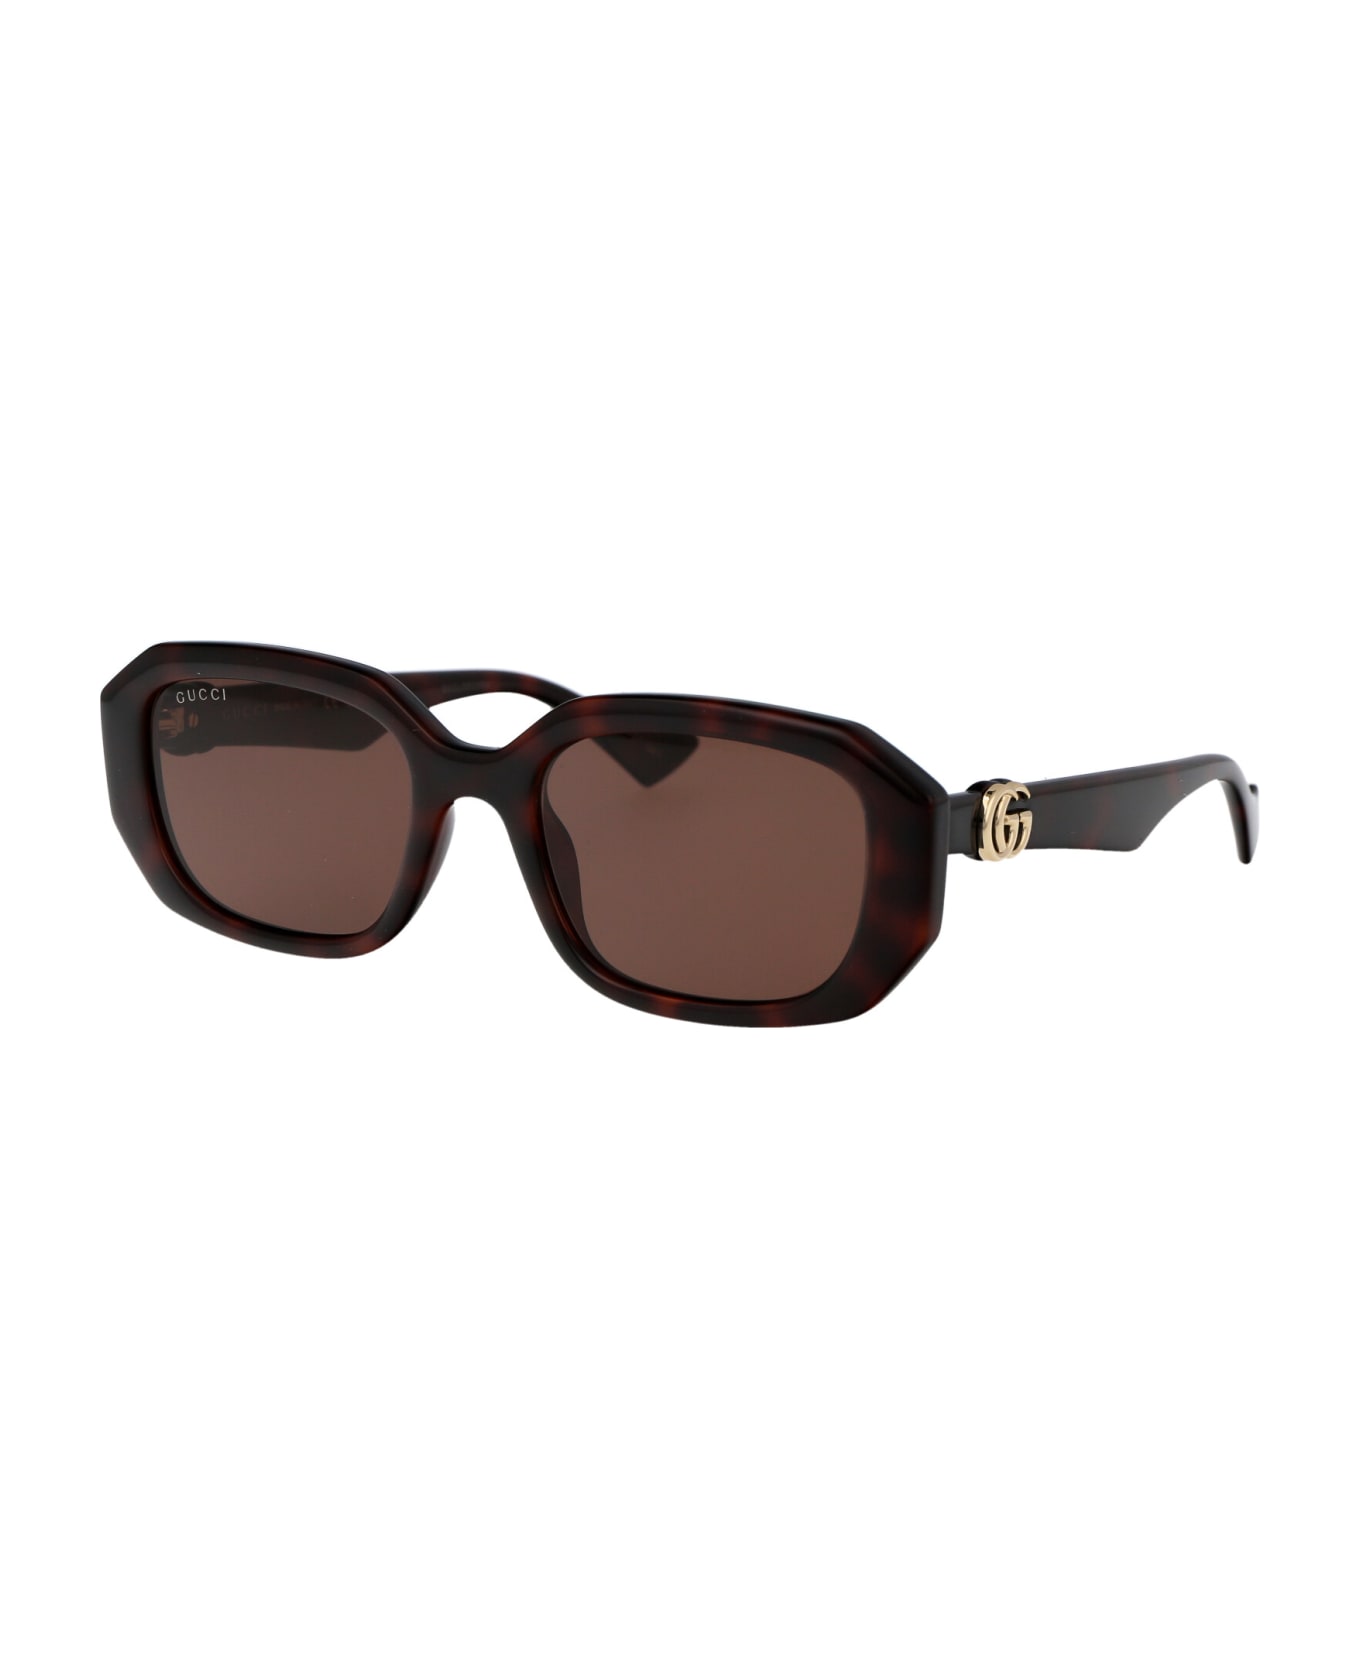 Gucci Eyewear Gg1535s Sunglasses - 002 HAVANA HAVANA BROWN サングラス